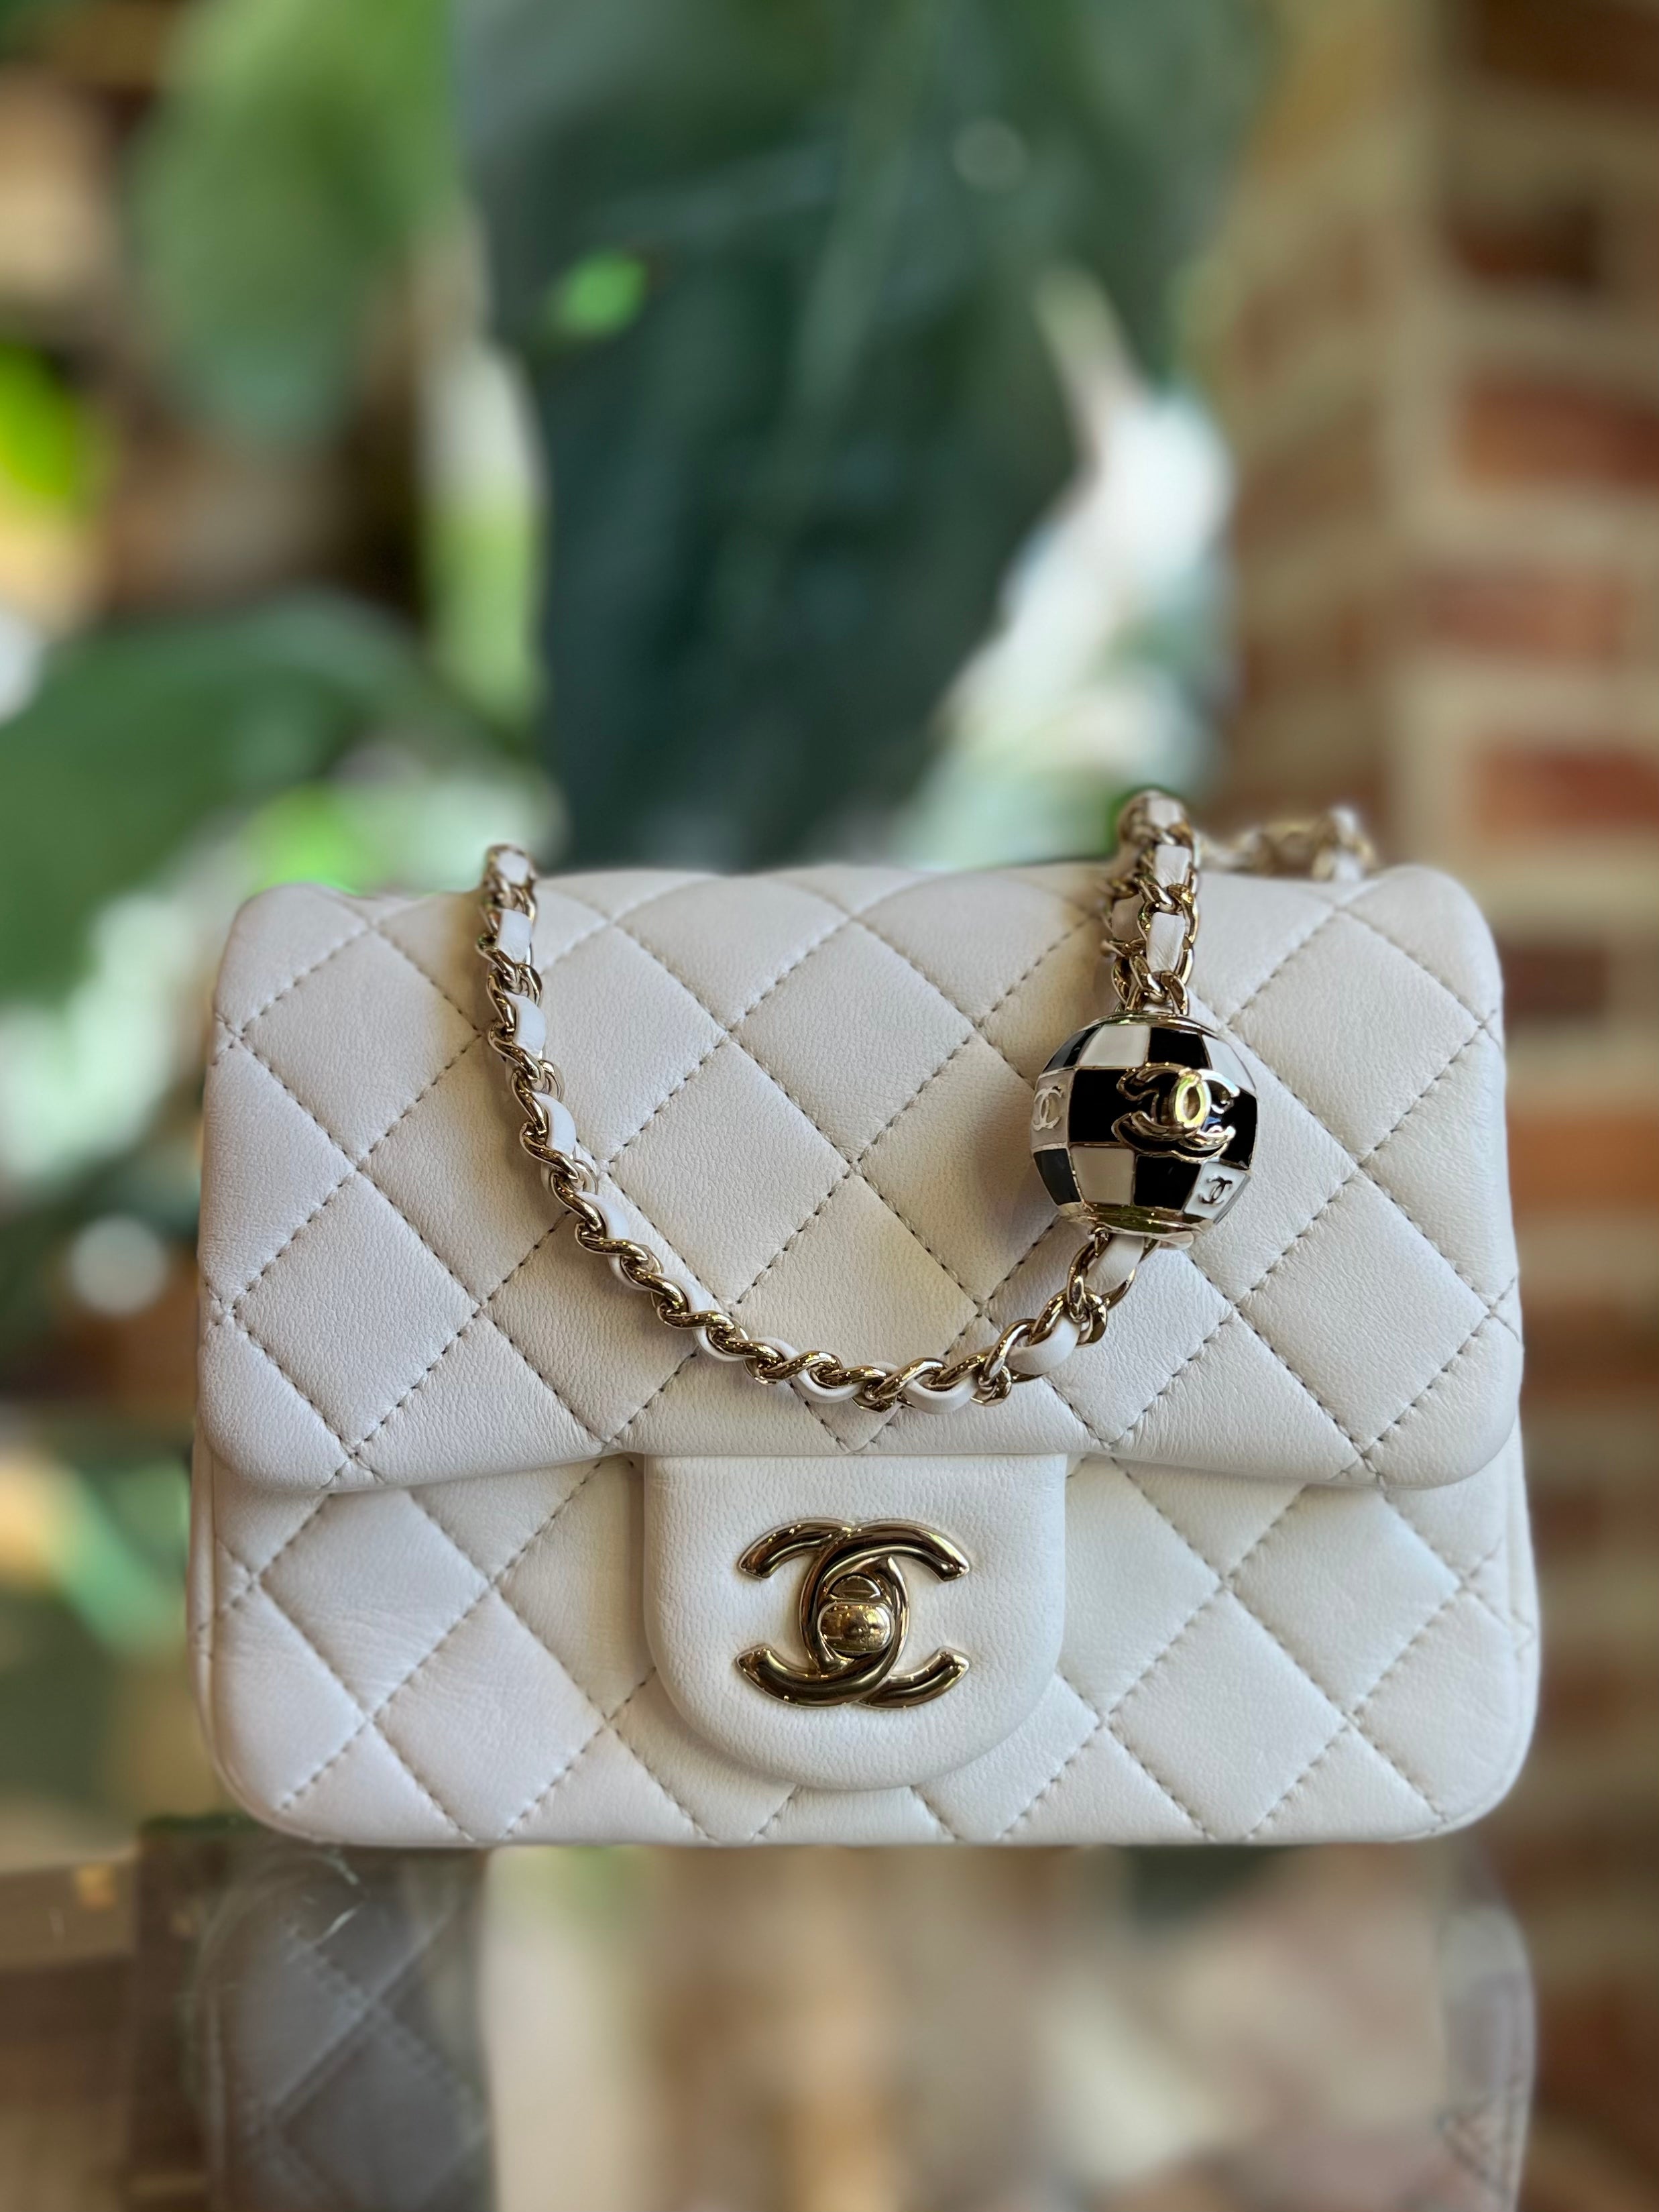 Chanel Mini Pearl Crush Flap Bag